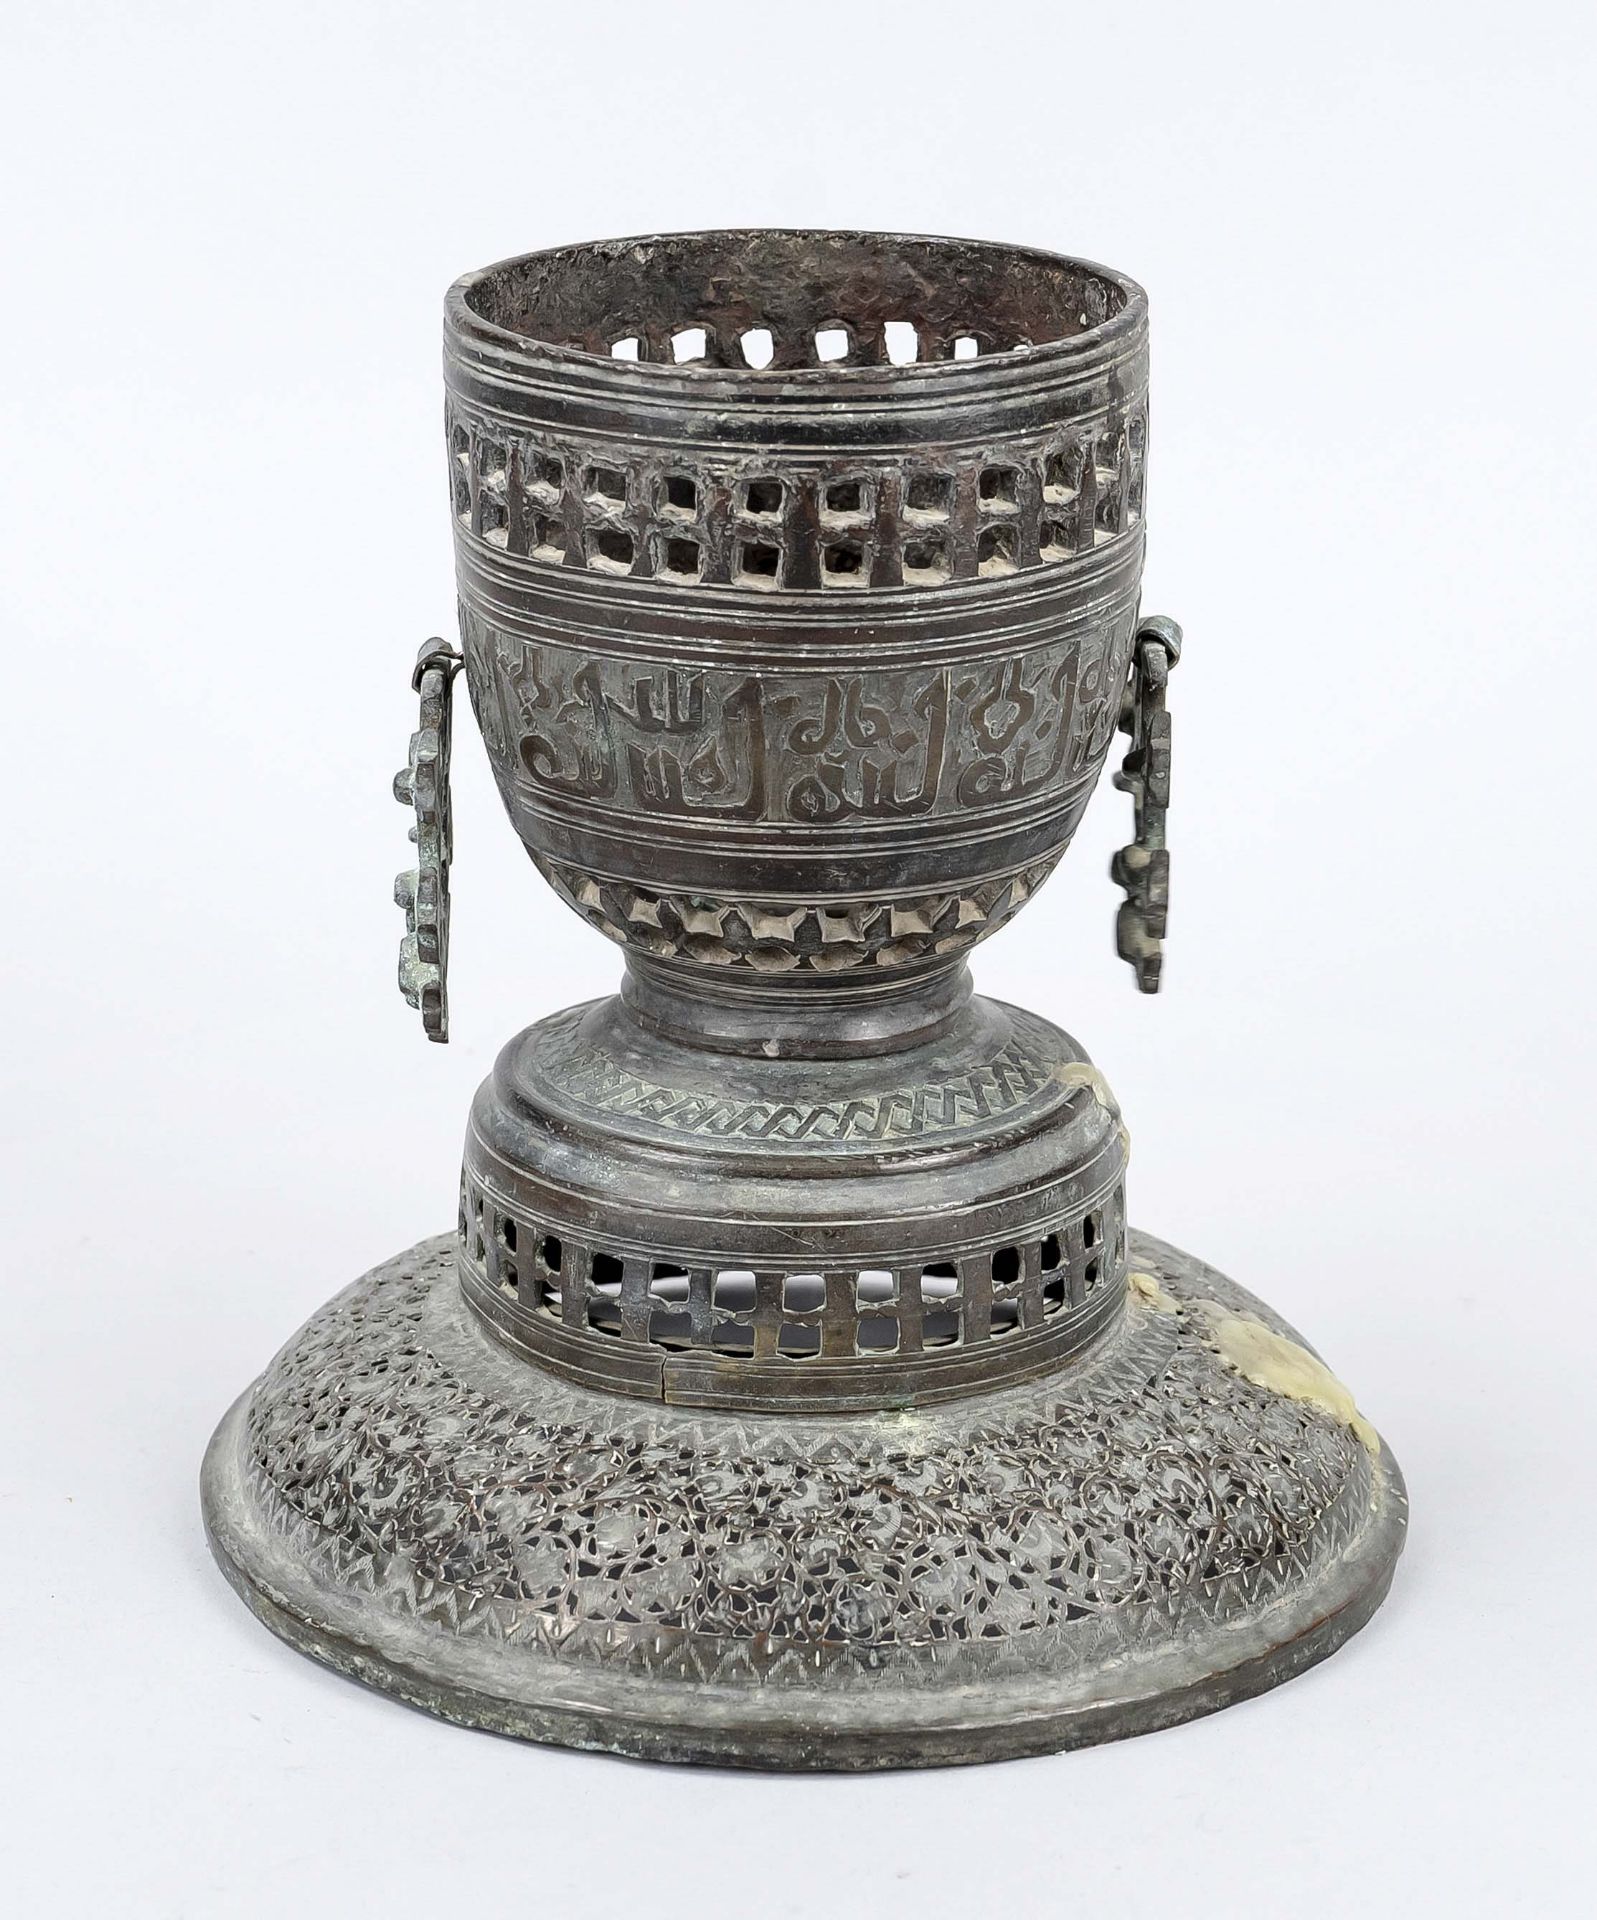 Persian incense burner, probably Iran c. 1900, bronze with numerous openwork and Koranic verses,